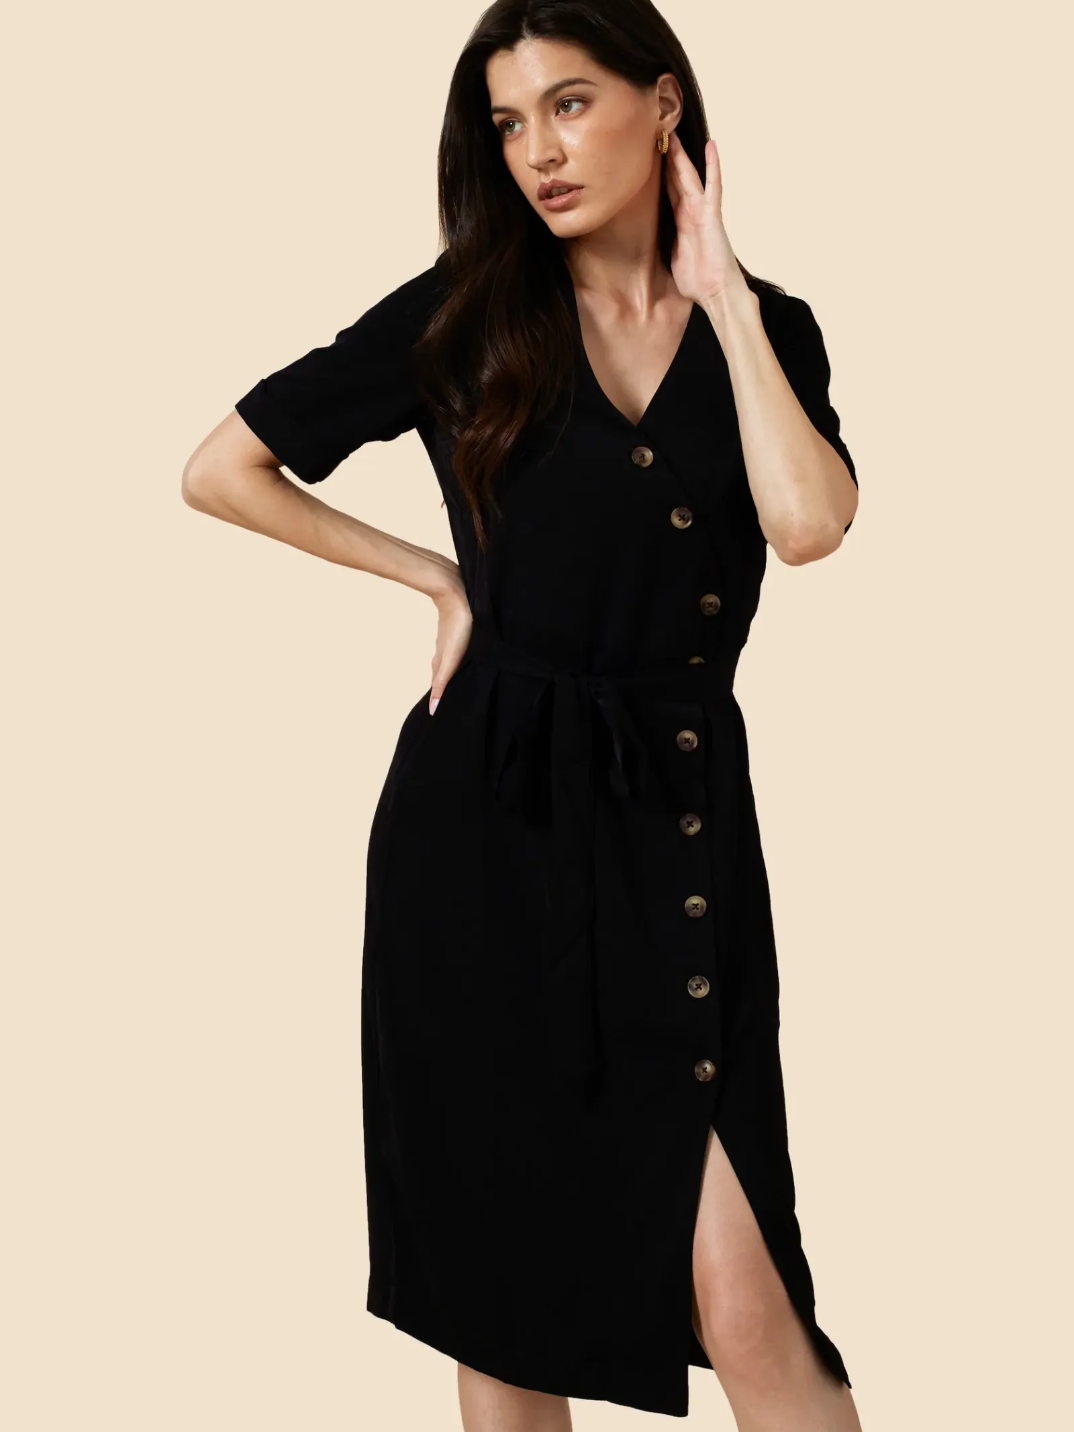 the Emelie Dress Black sustainable fashion women's clothing made in small batches workwear basics capsule wardrobe